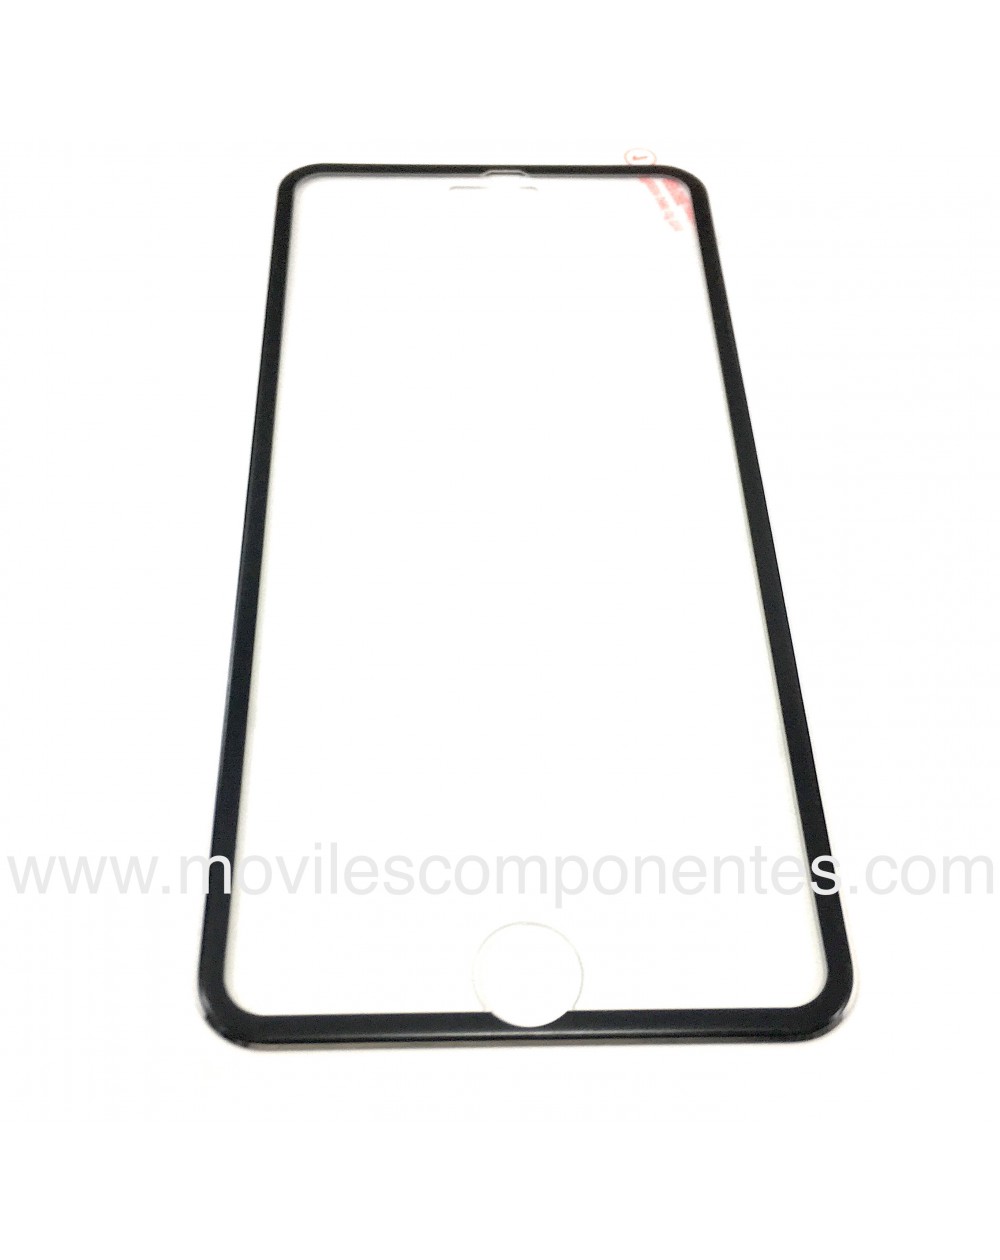 https://www.movilescomponentes.com/2419-large_default/protector-de-pantalla-iphone-7-8-con-borde-aluminio.jpg